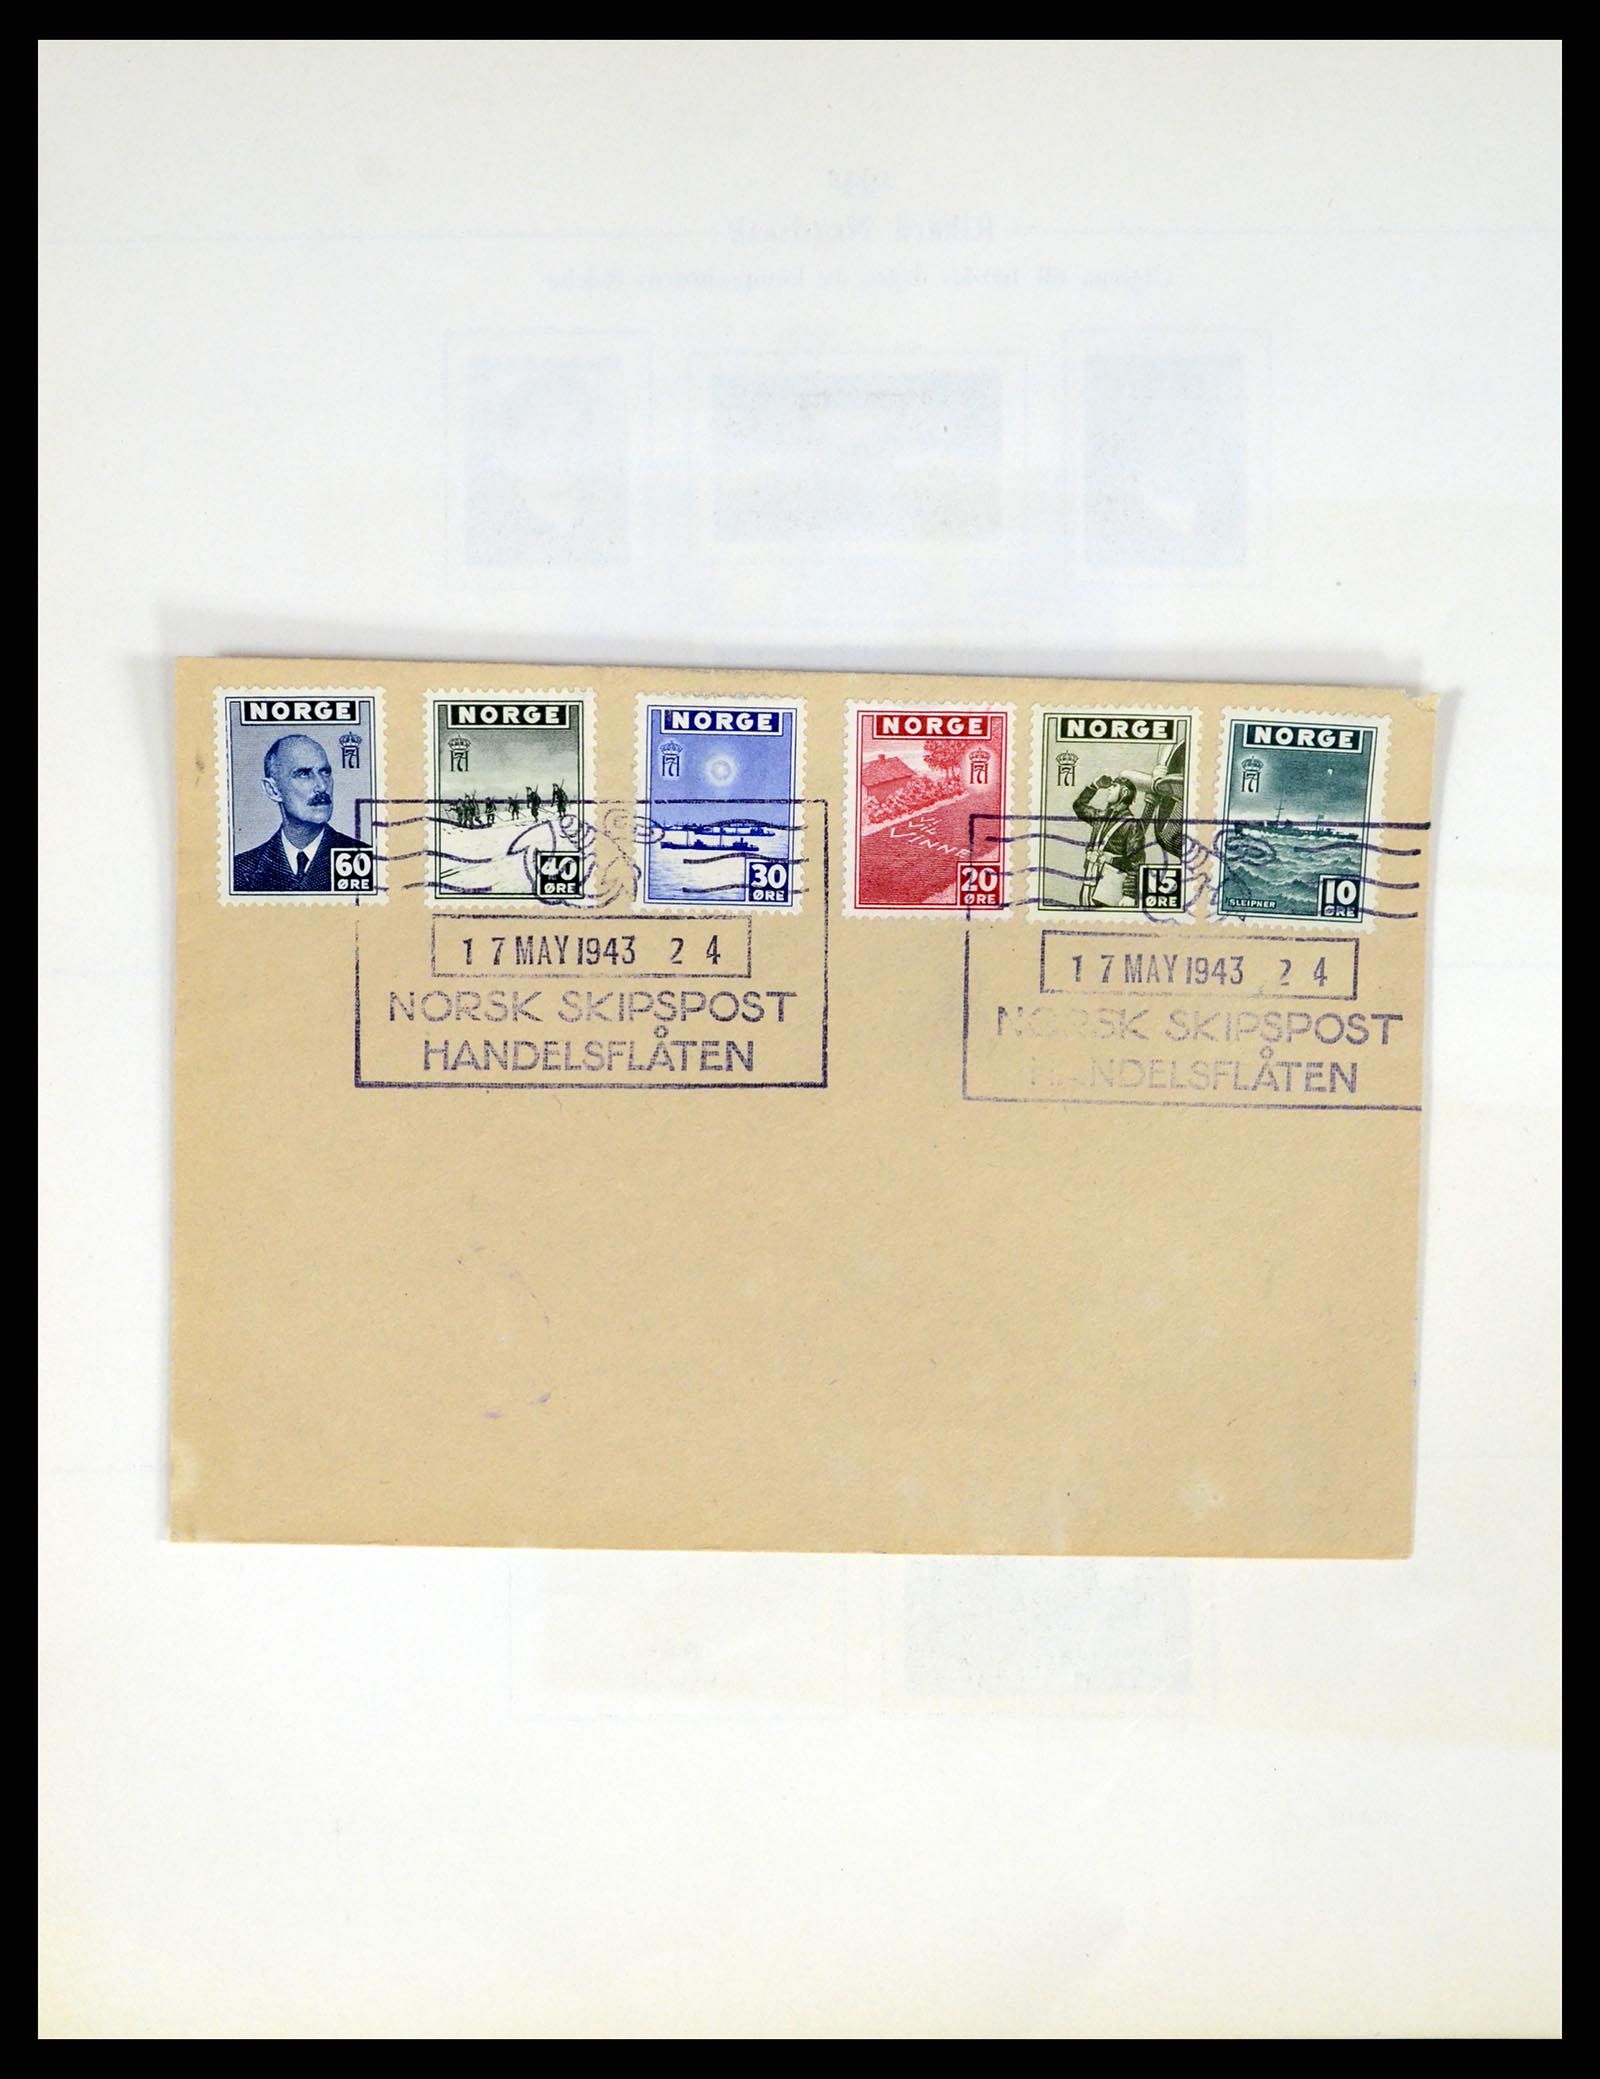 37387 025 - Stamp collection 37387 Scandinavia 1851-1960.